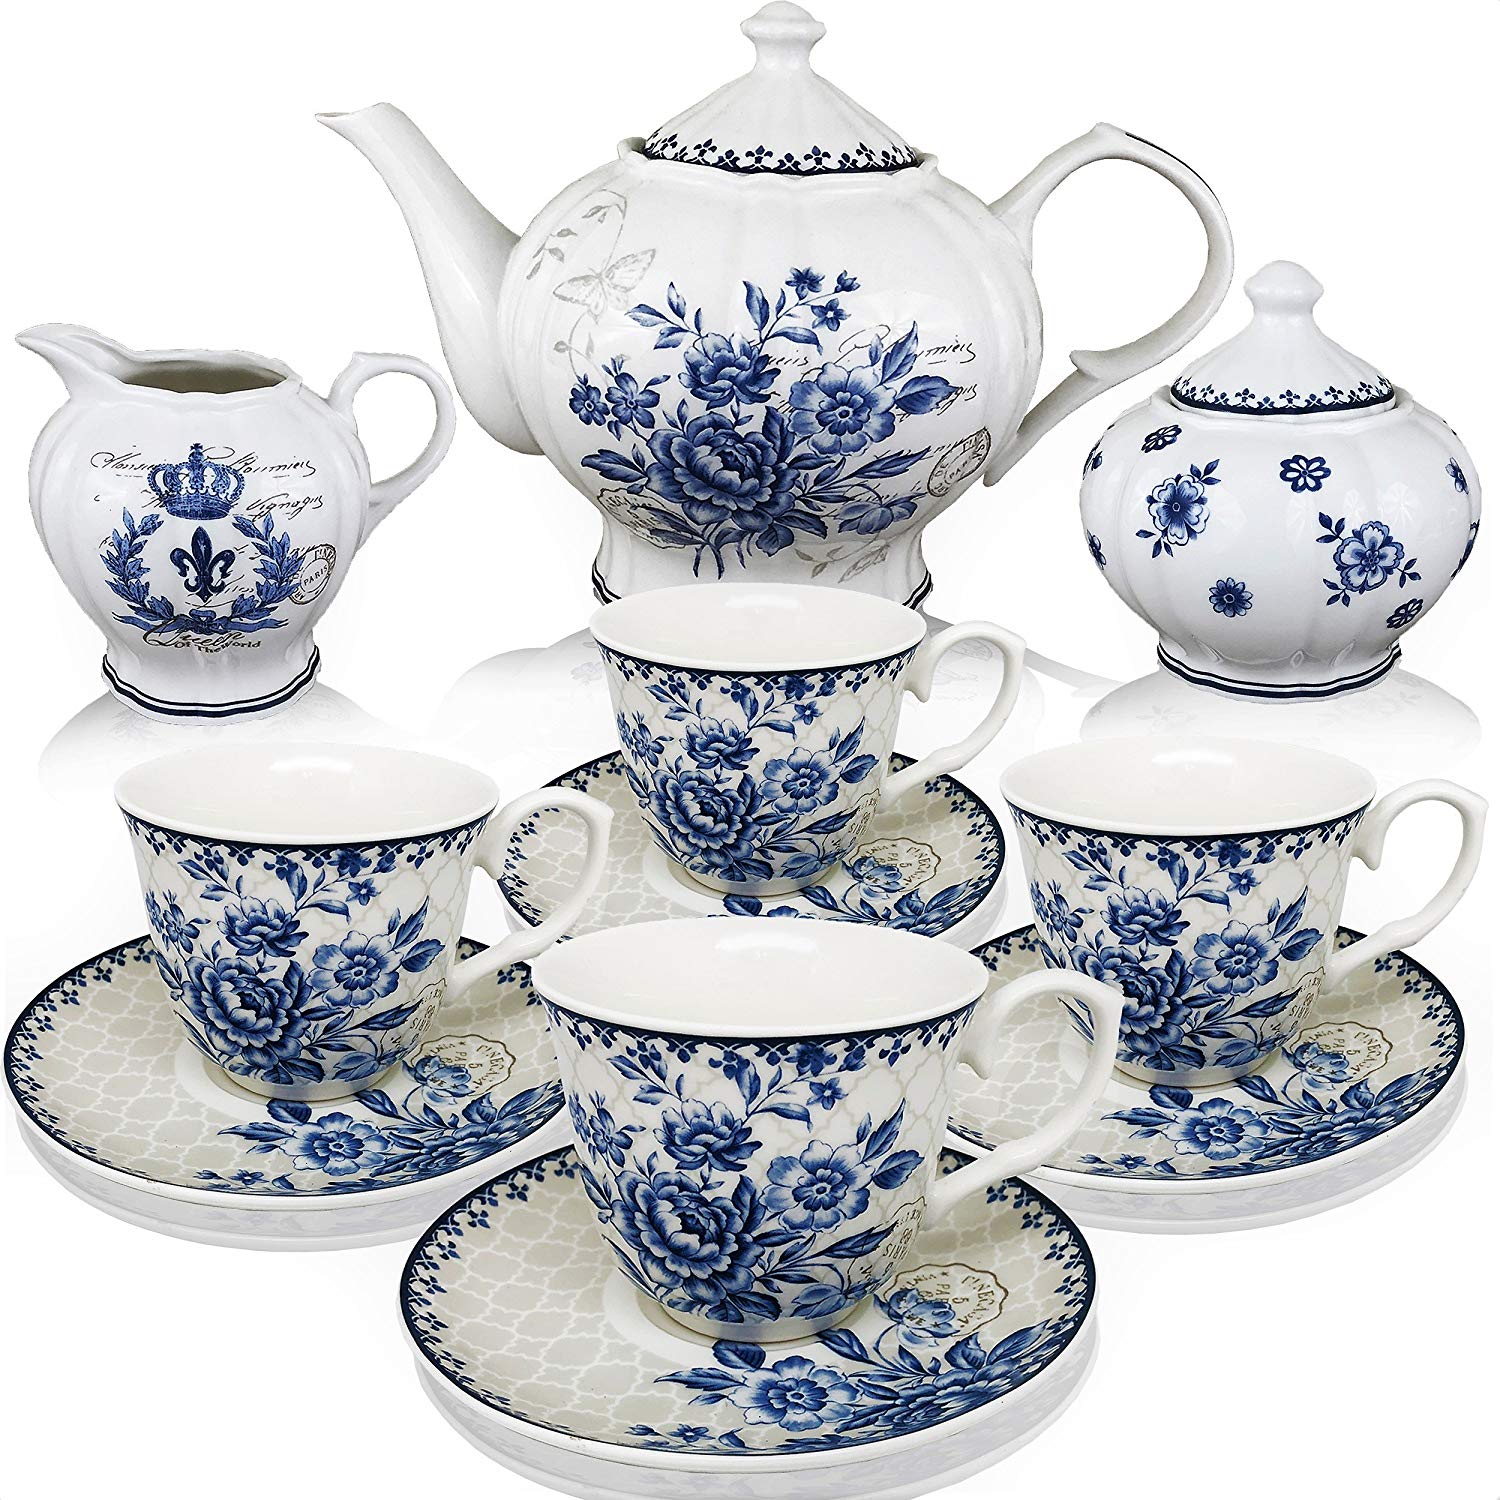 Tea Set - Tea Pot & Tea Cup Btrfly Org Sandb 1 Set Kudu Arts